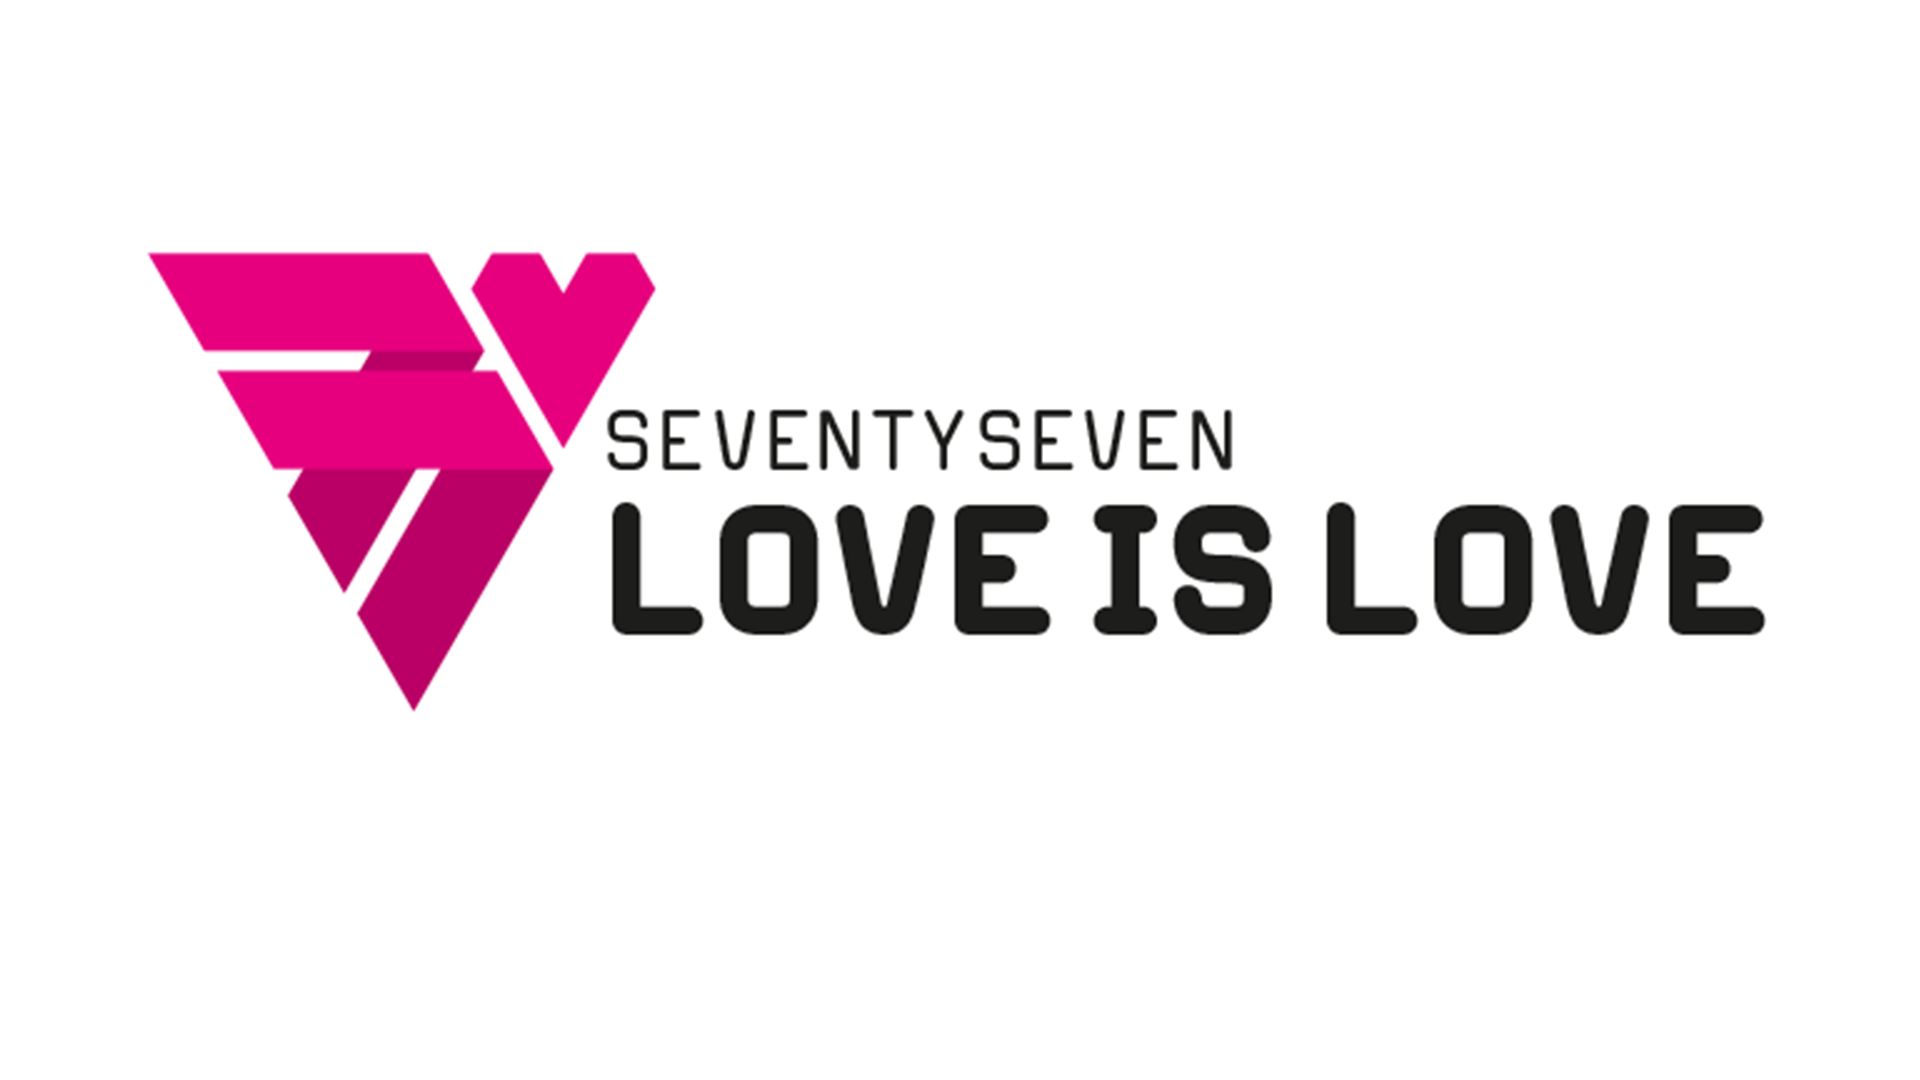 77 LOVE IS LOVE 2015